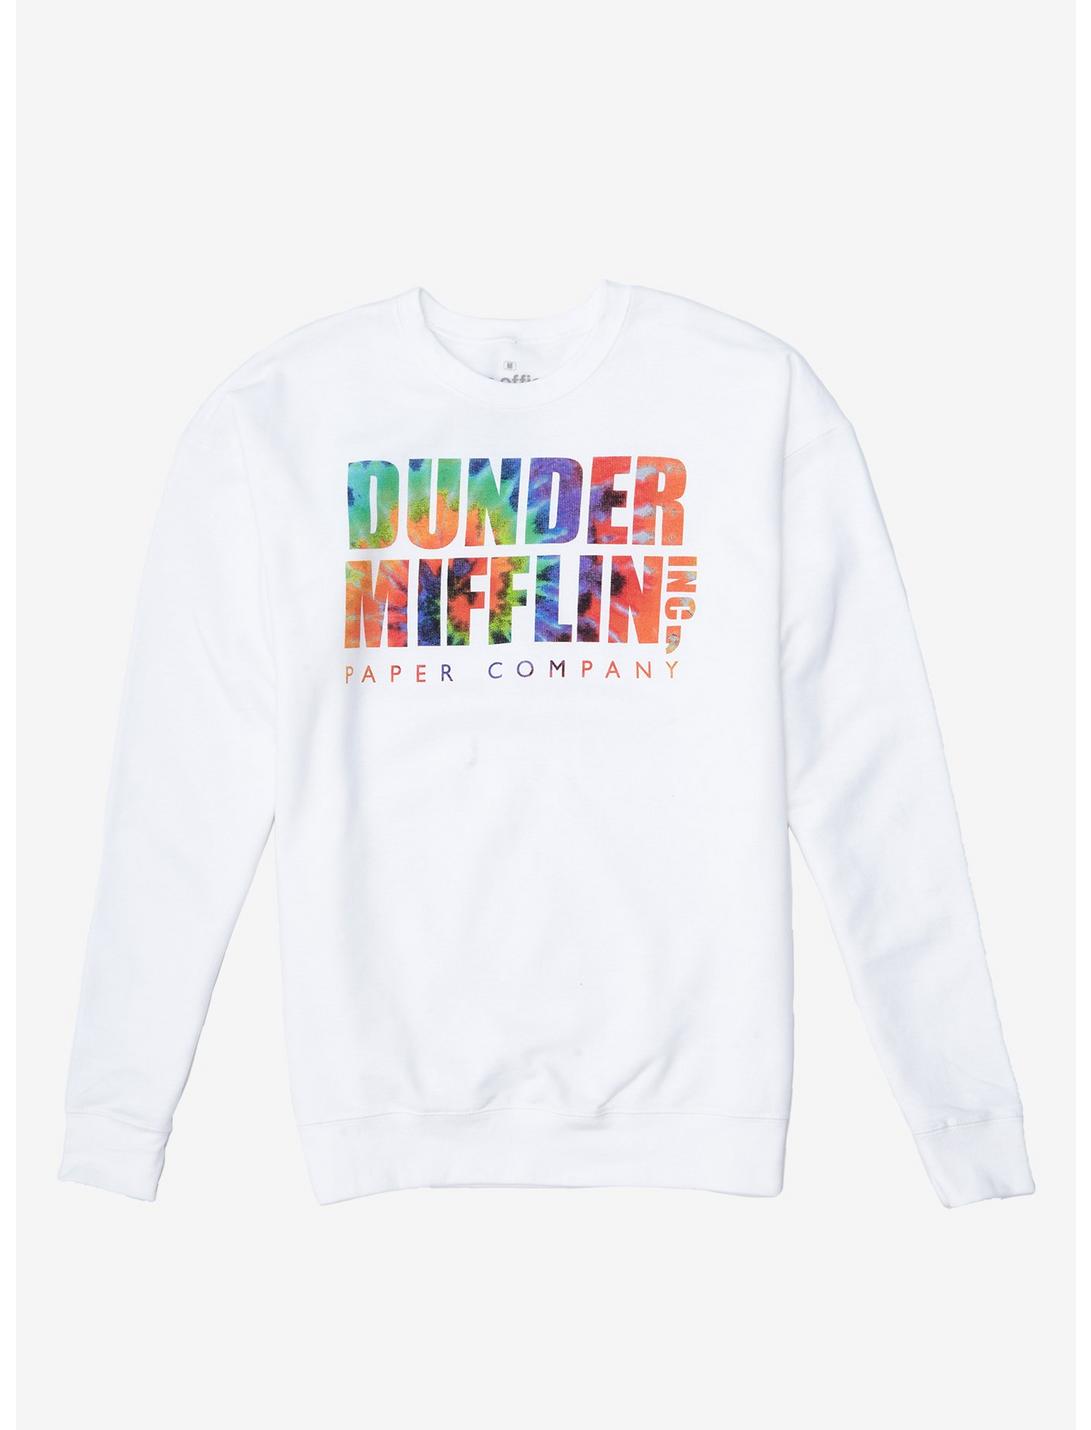 The Office Dunder Mifflin Tie-Dye Logo Girls Sweatshirt, MULTI, hi-res